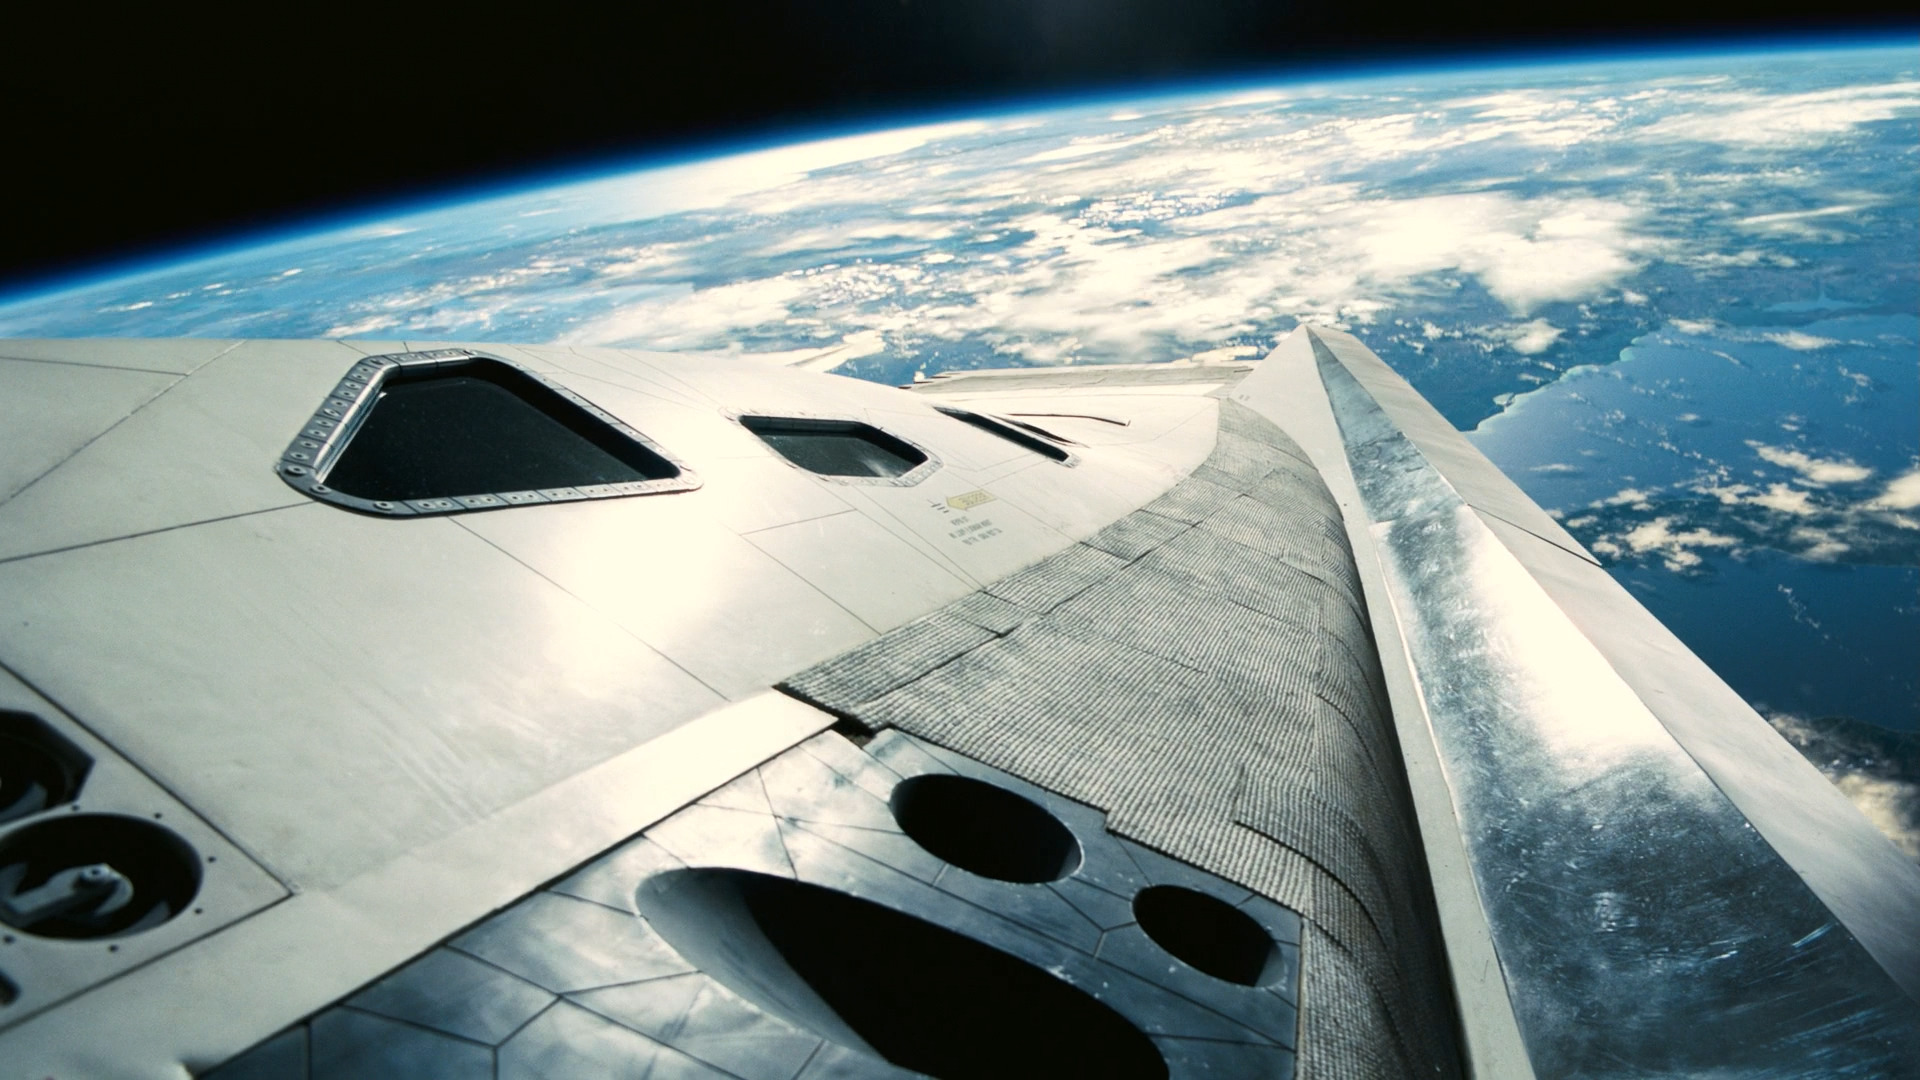 Interstellar (movie), Film Stills, Movies Wallpaper